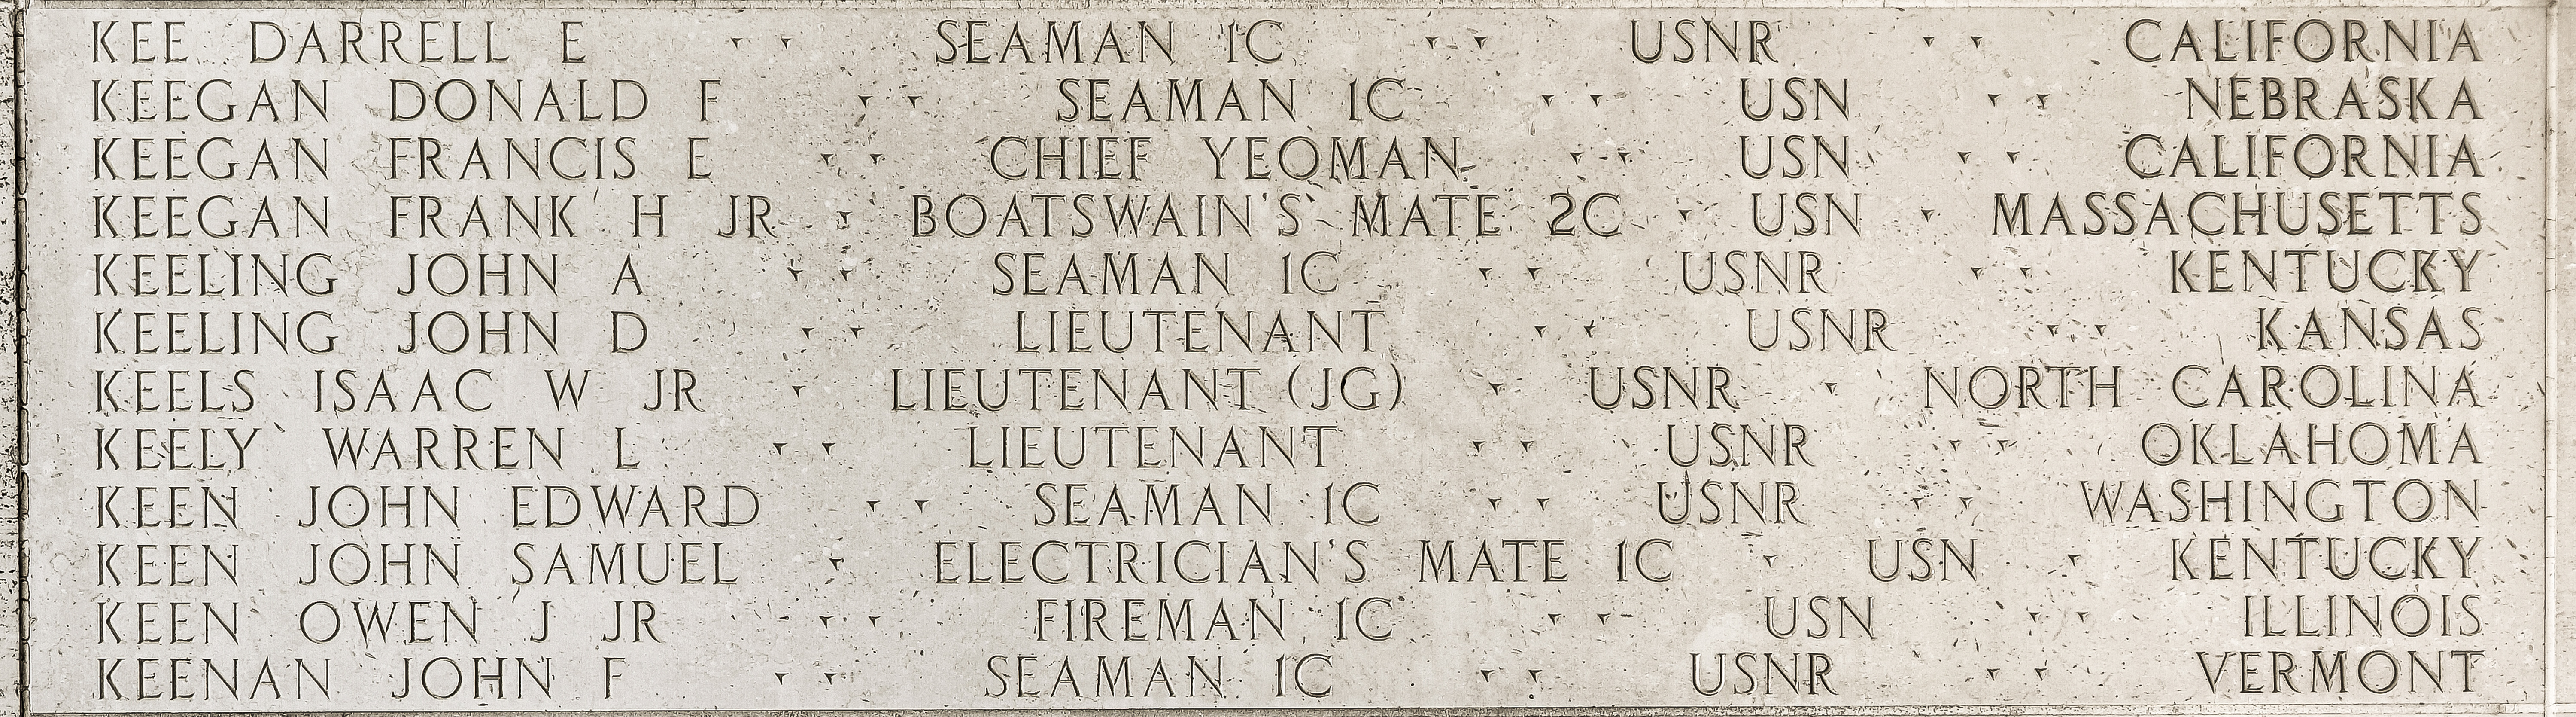 Donald F. Keegan, Seaman First Class